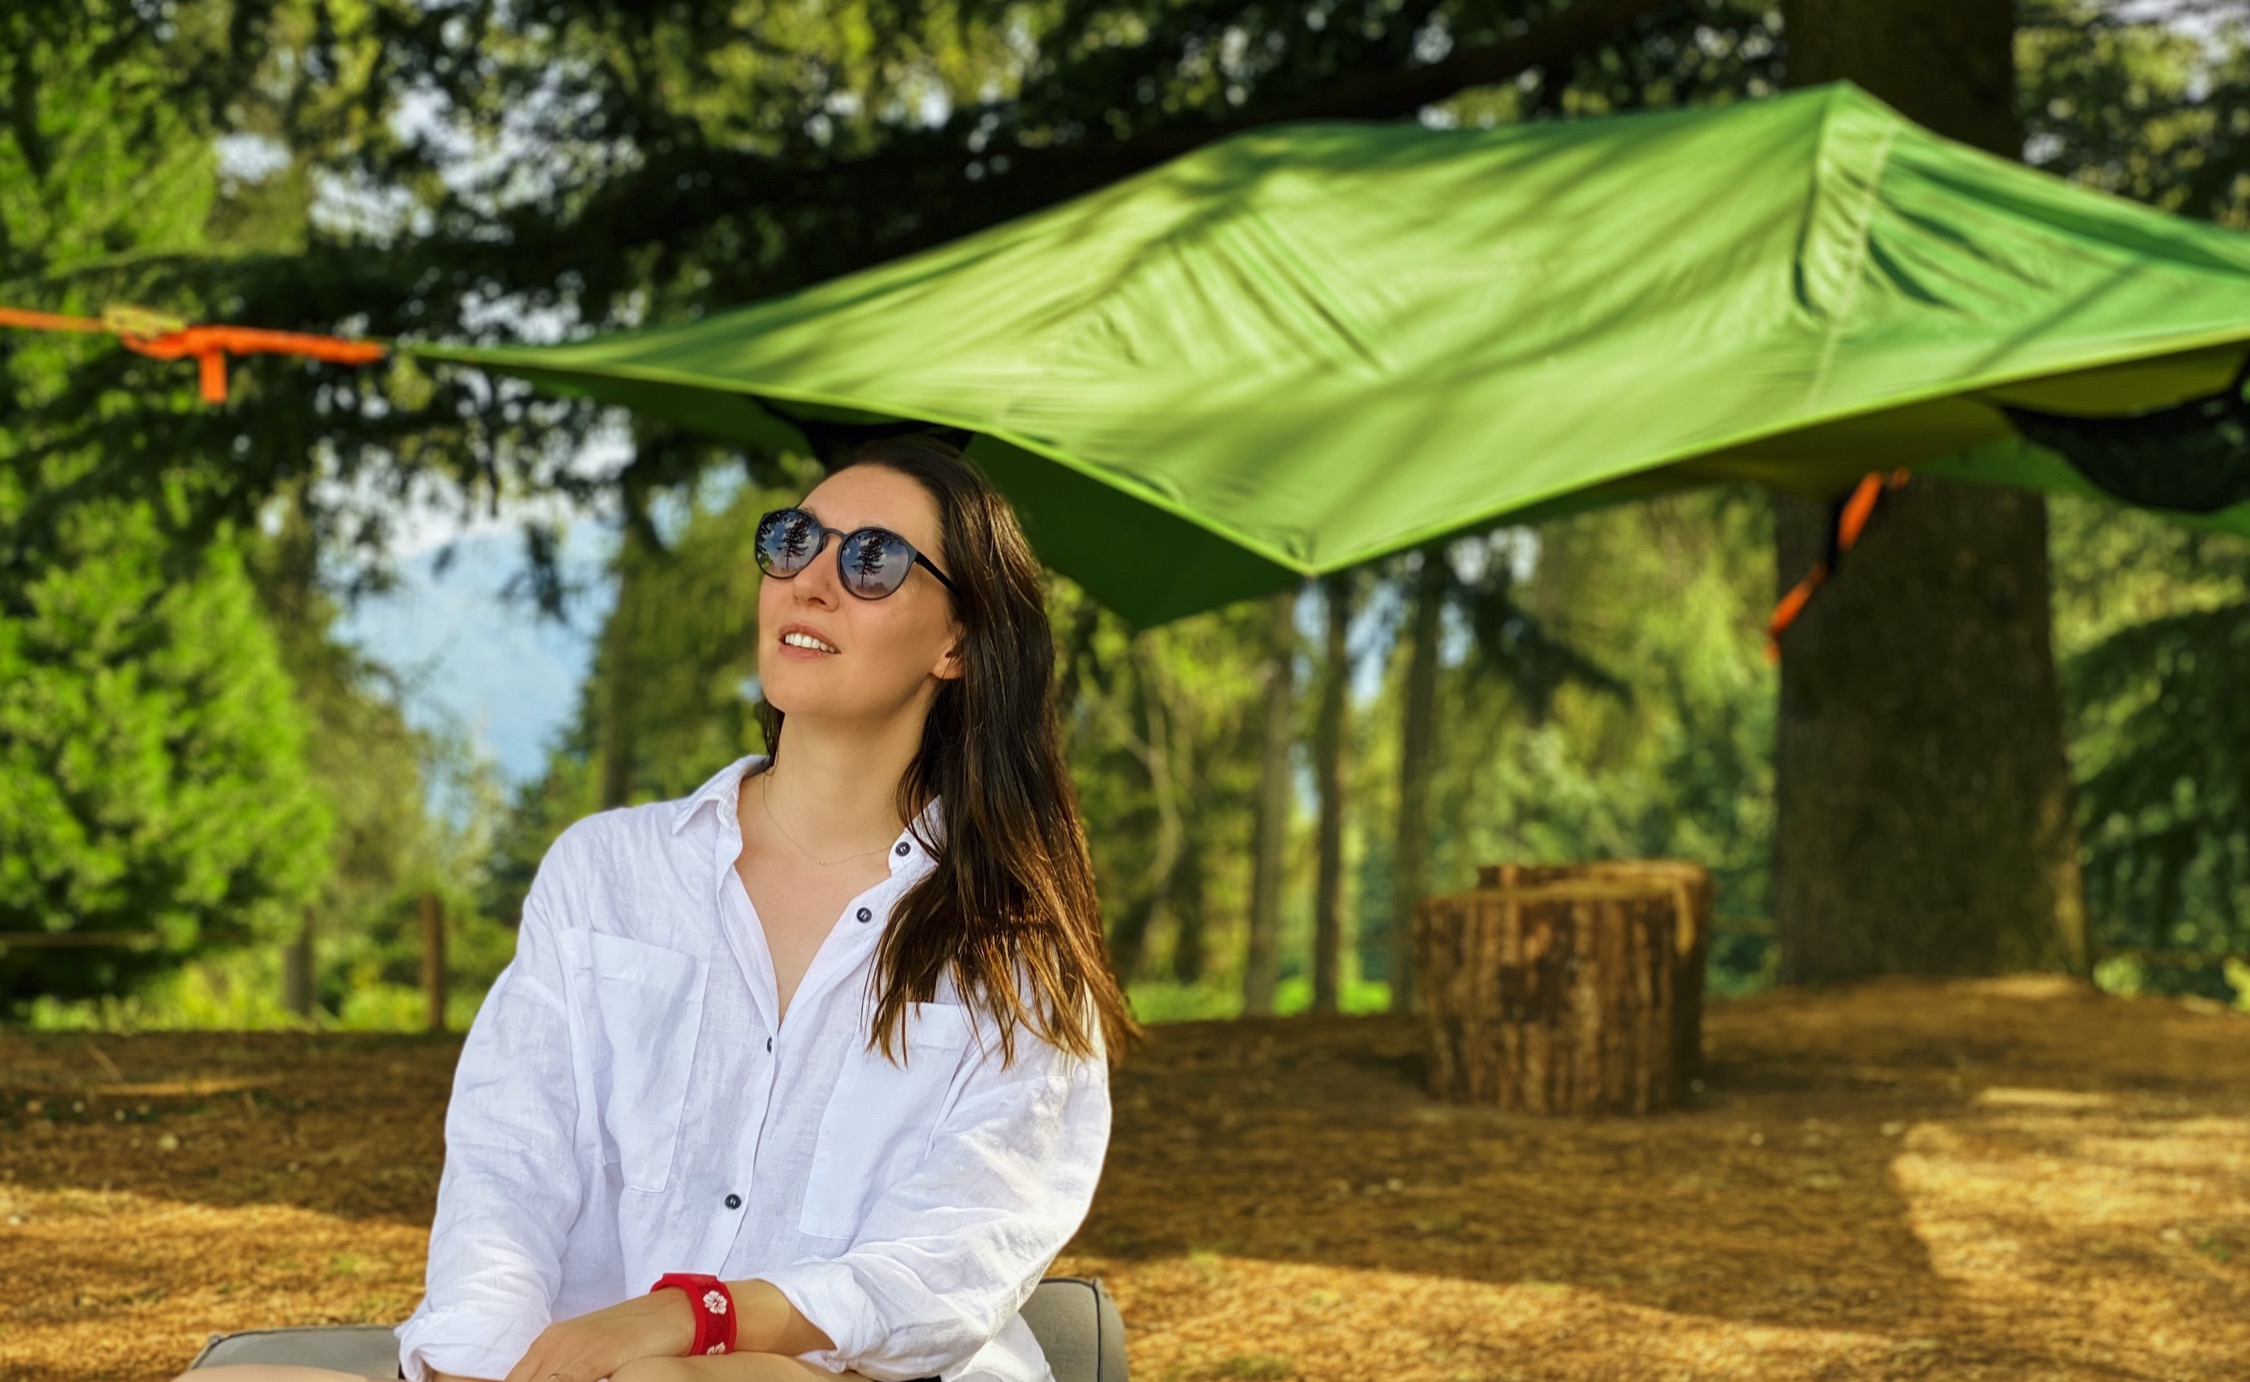 Tree Tent Experience at Parco San Grato by Villa Carona